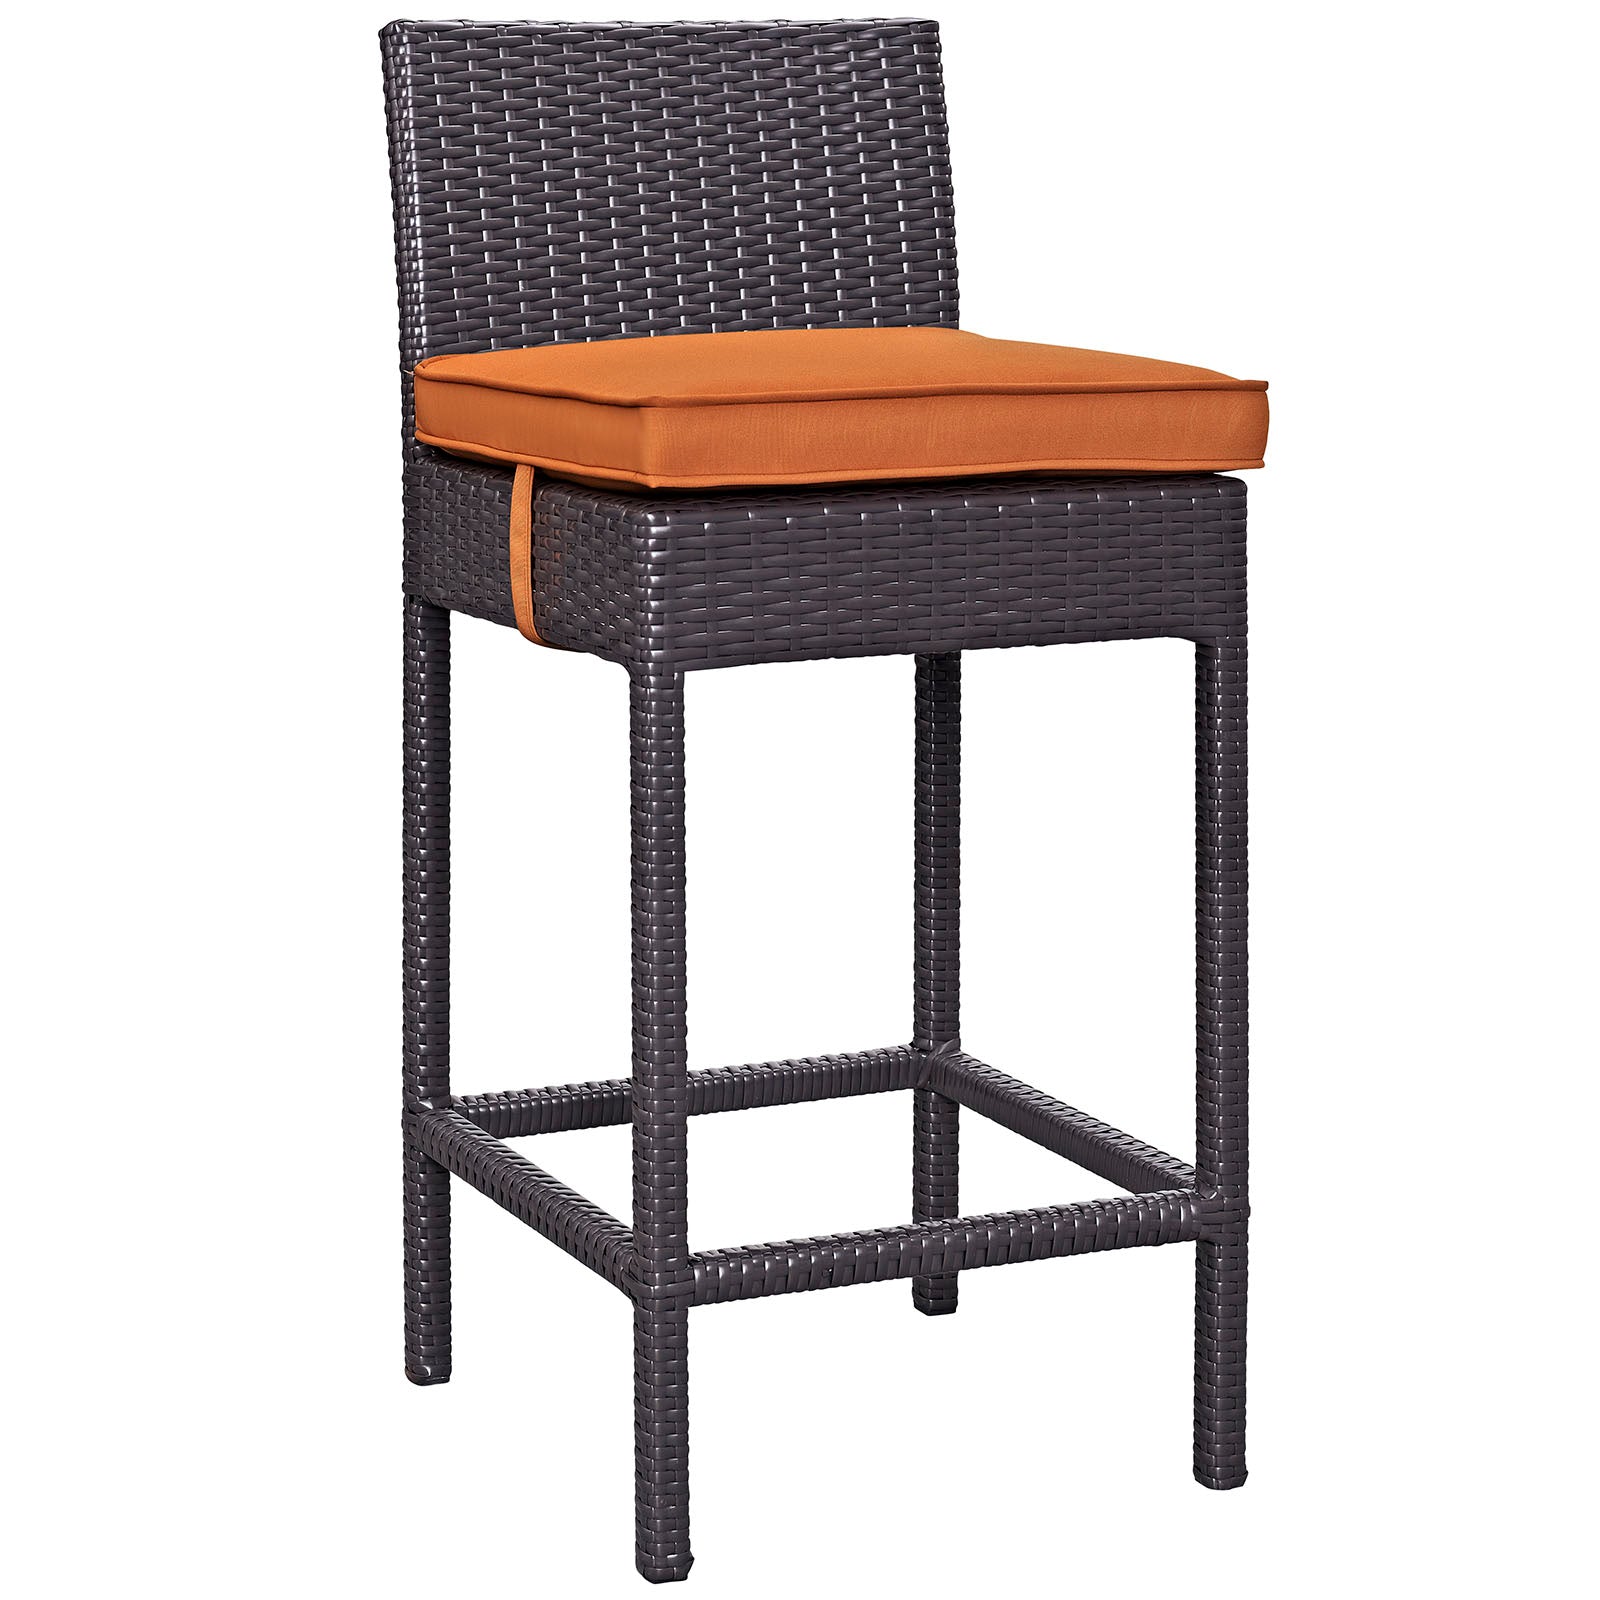 Modway Outdoor Barstools - Convene Outdoor Patio Fabric Bar Stool Espresso Orange